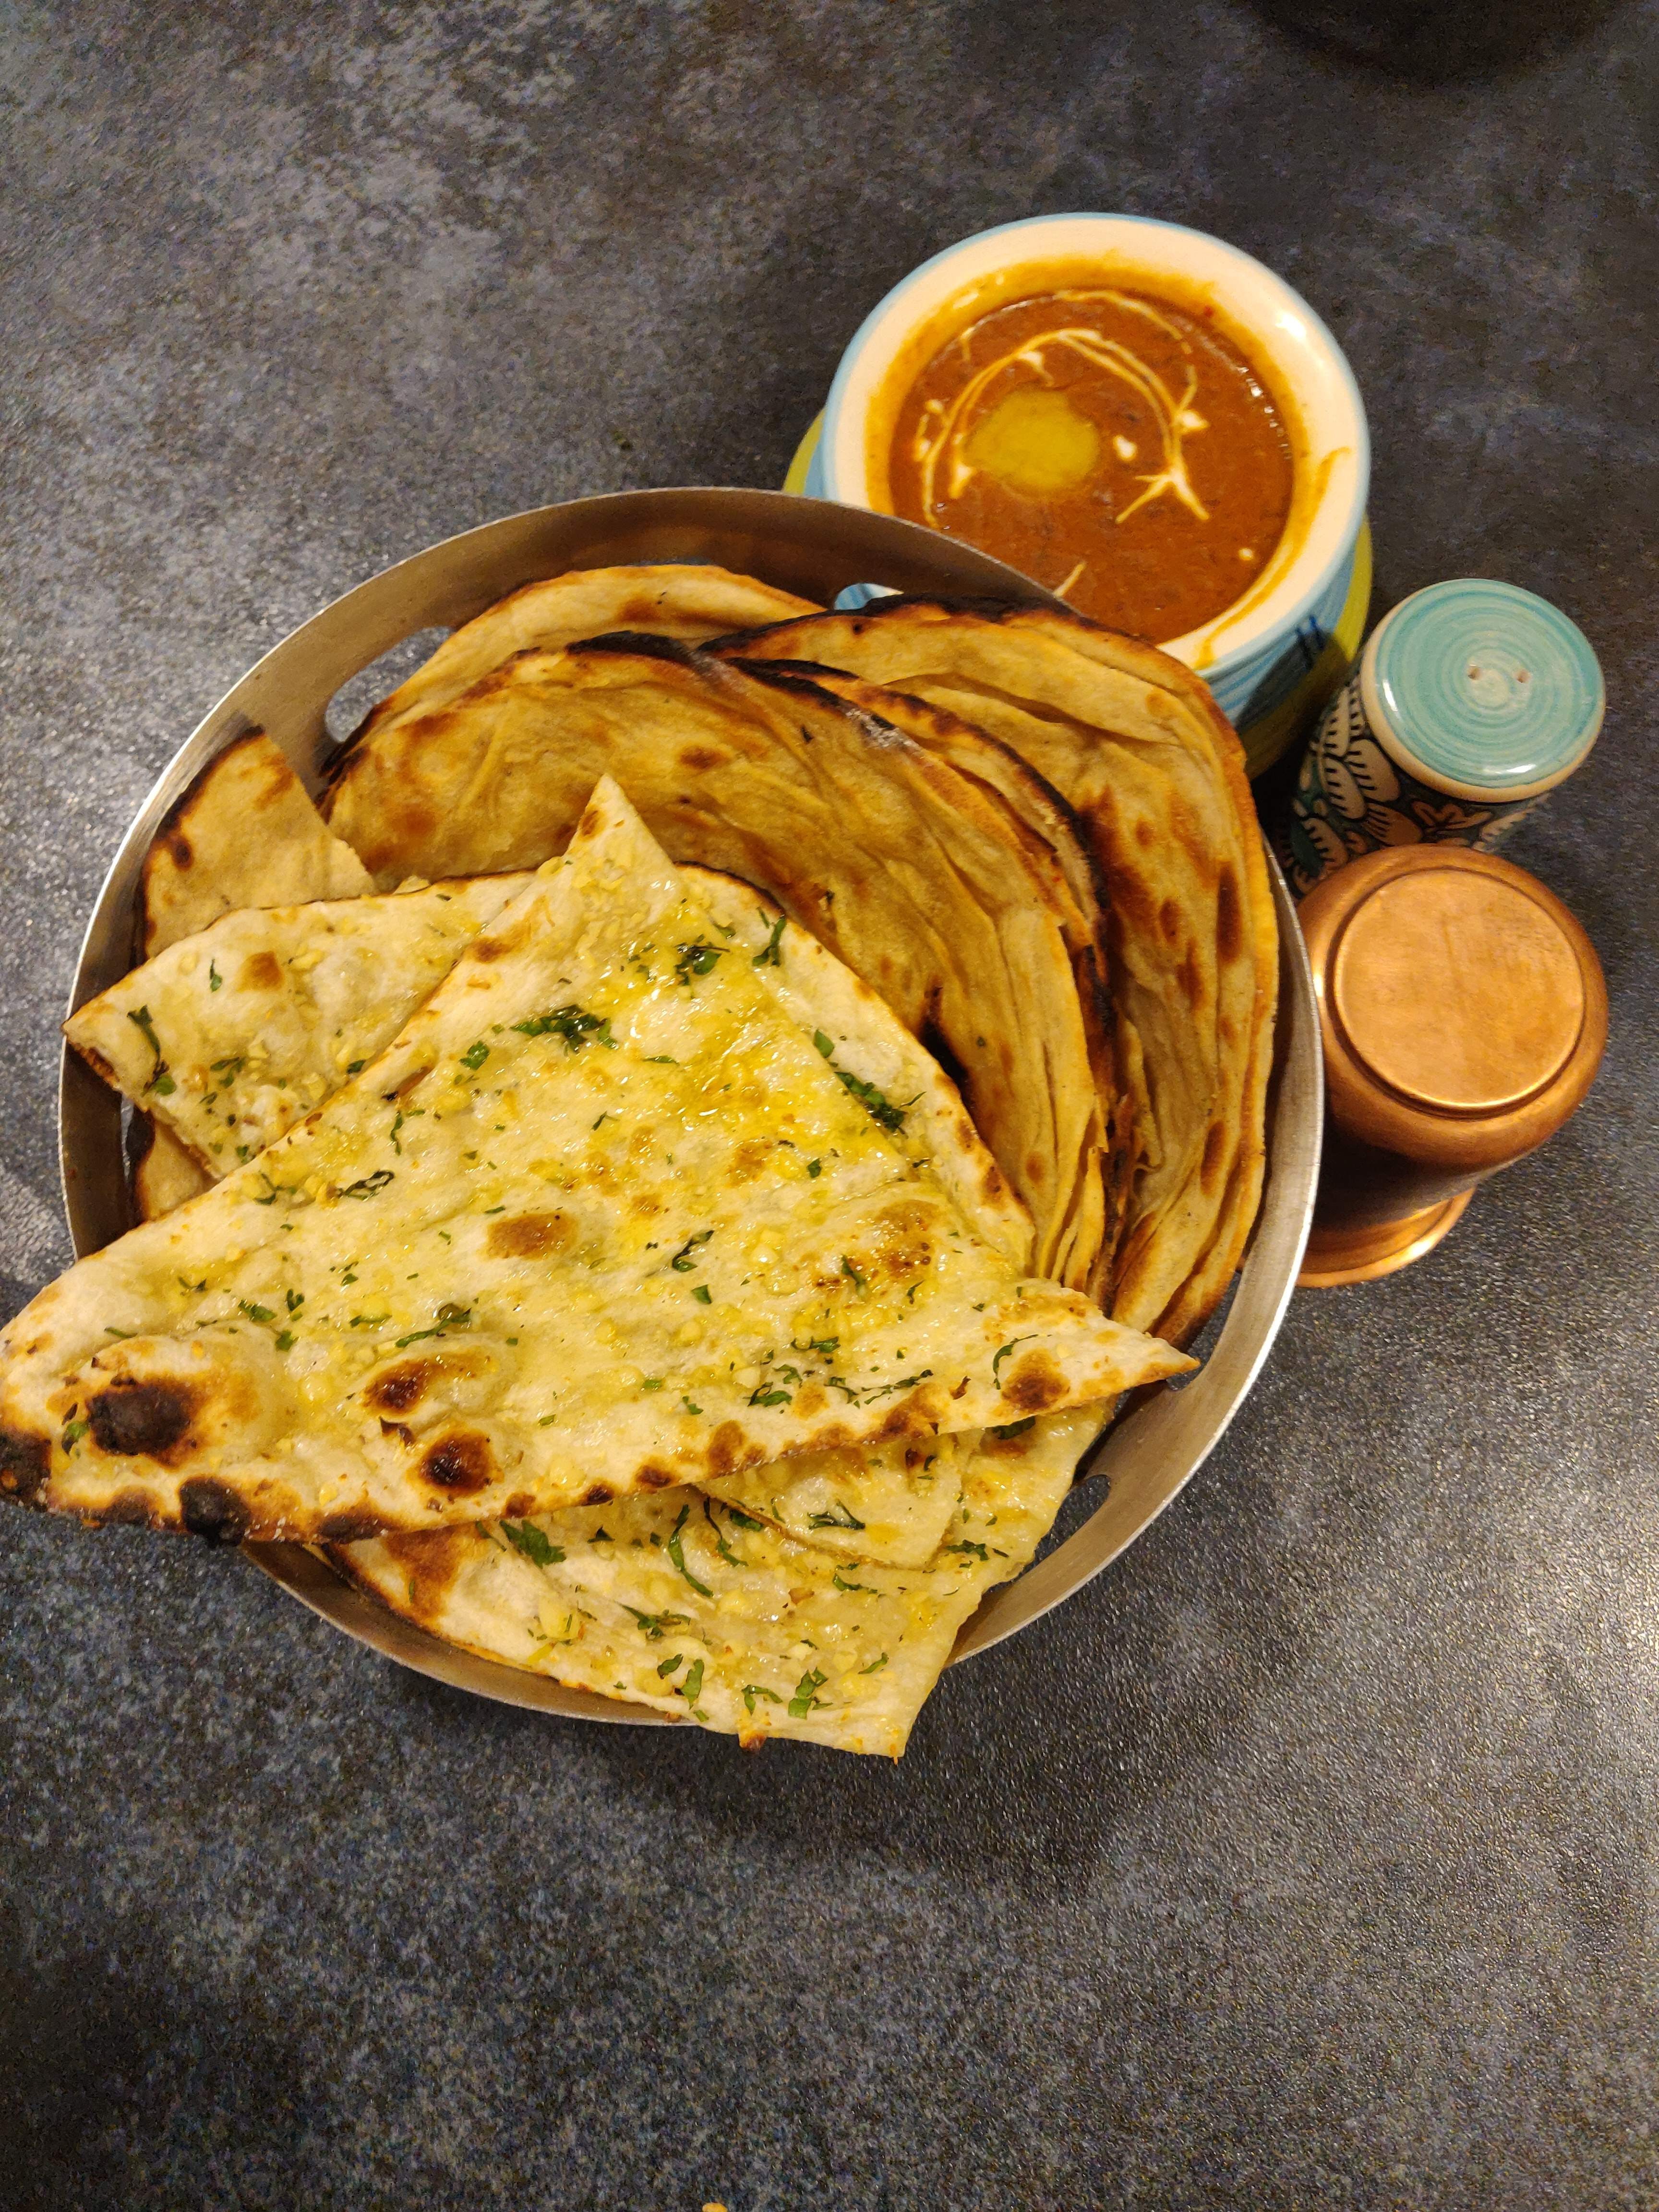 Dish,Food,Cuisine,Ingredient,Roti prata,Paratha,Roti,Roti canai,Chapati,Naan